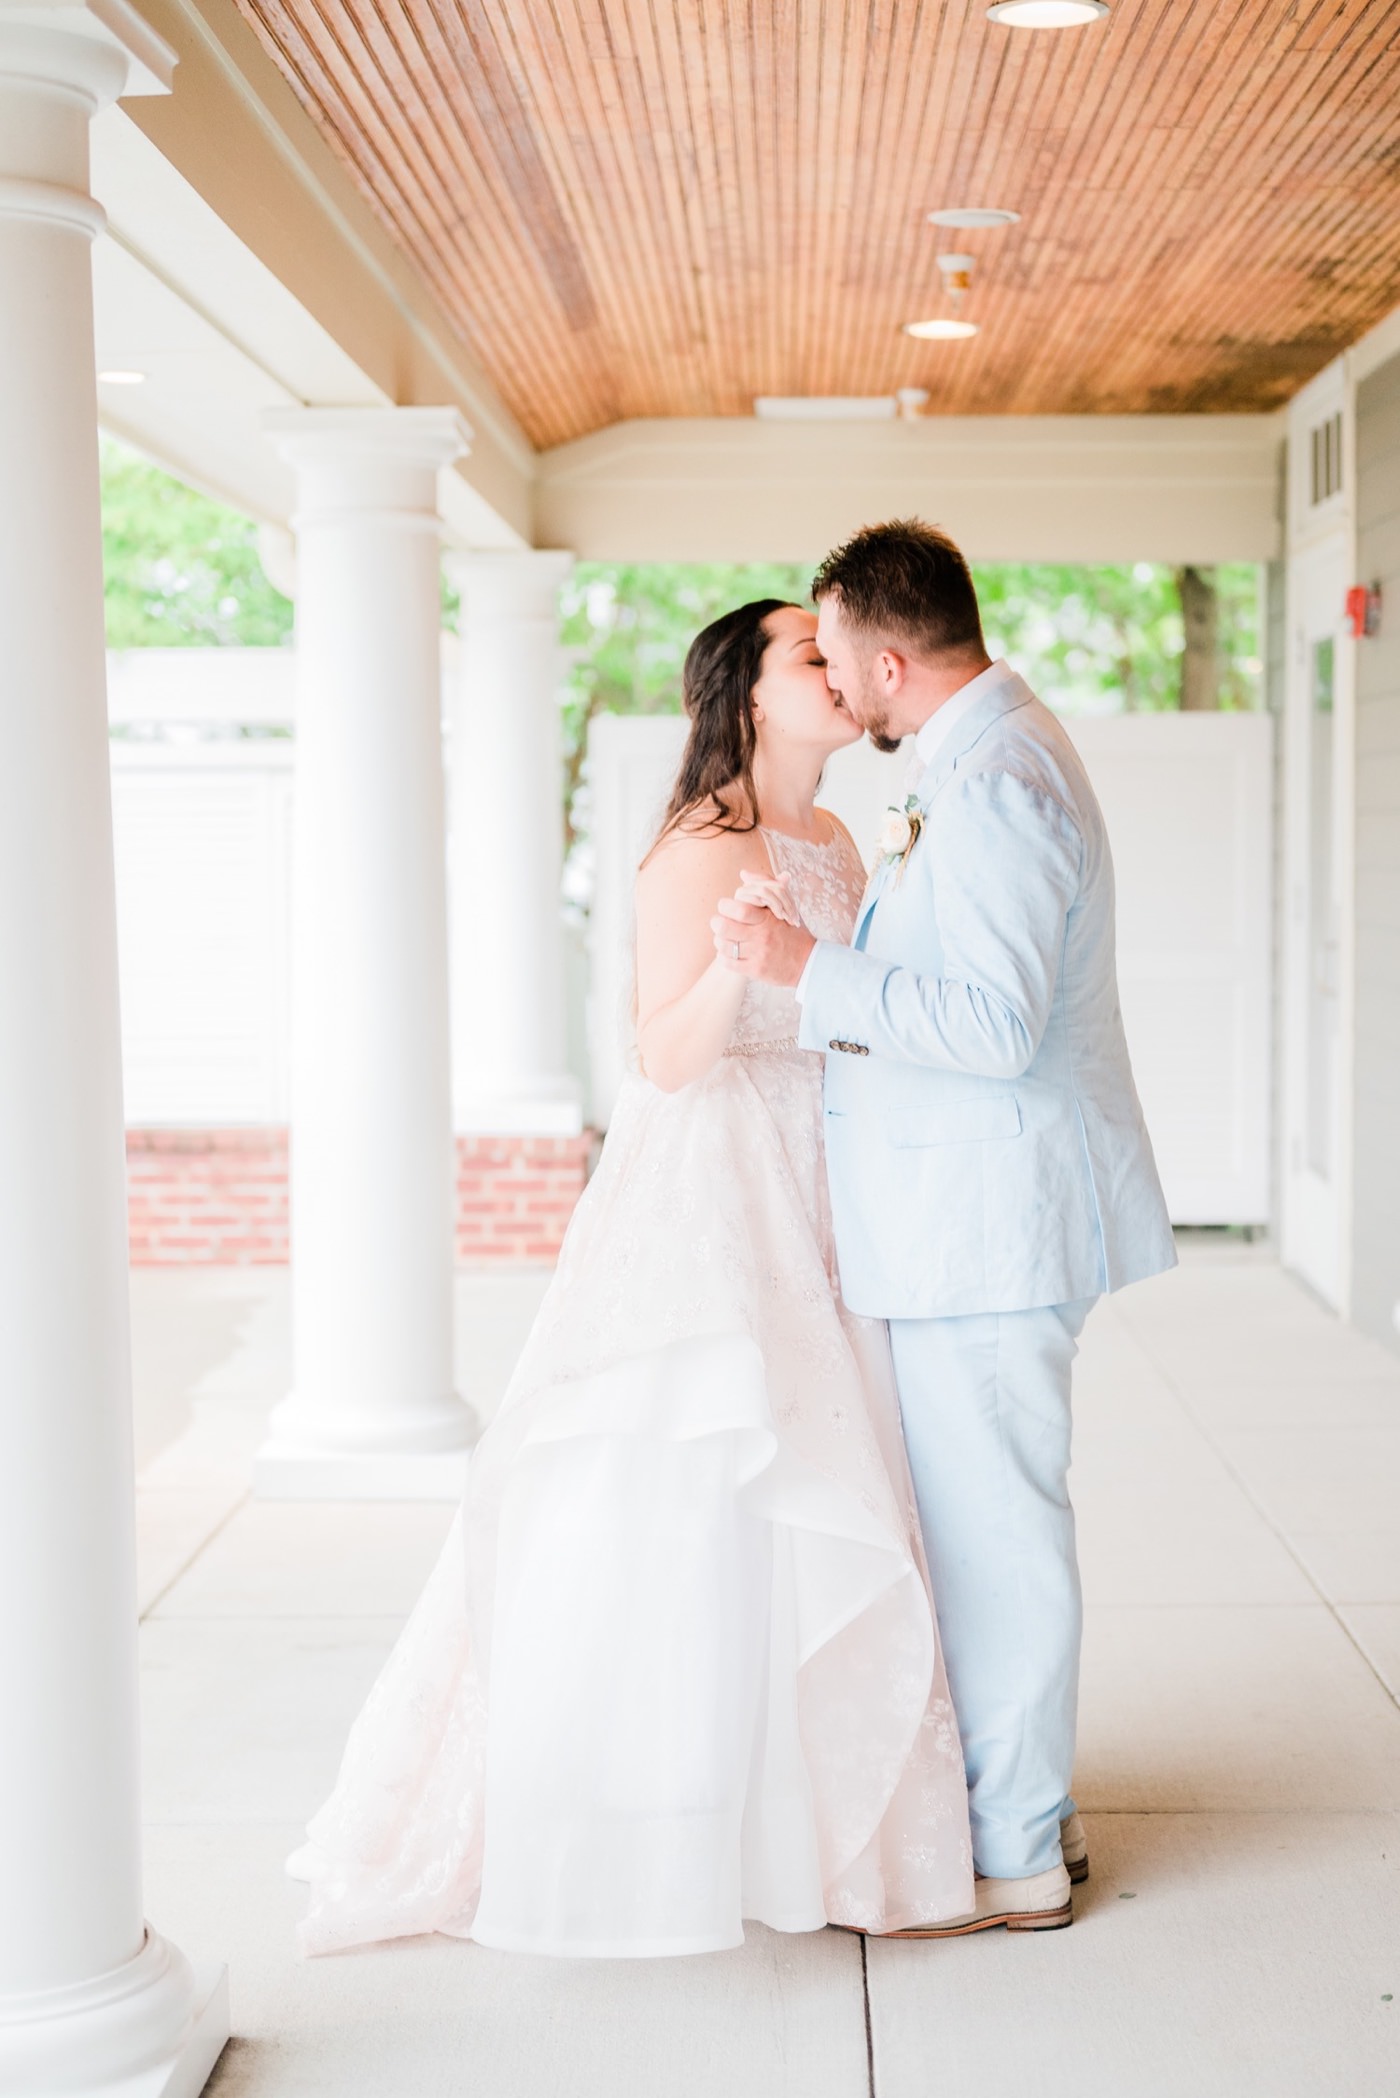 Chesapeake Bay Beach Club Wedding photos, bride and groom dance under porch, CBBC, Rainy wedding inspiration